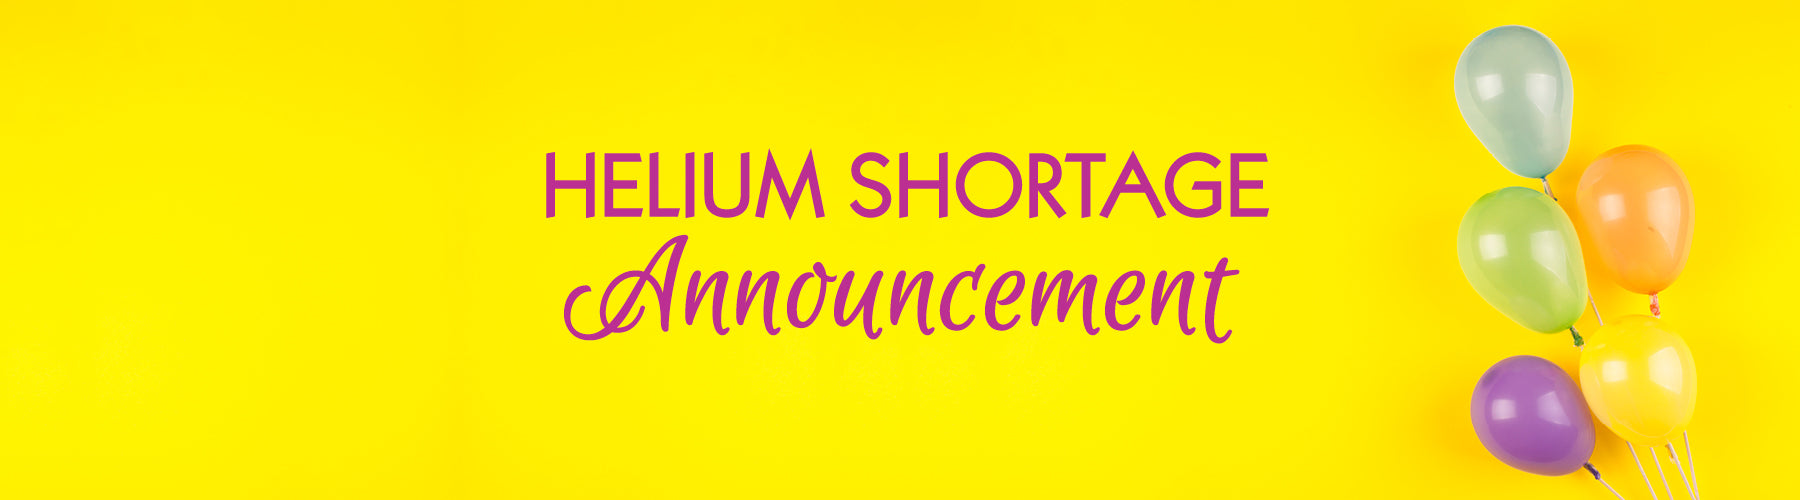 Helium Shortage Announcement